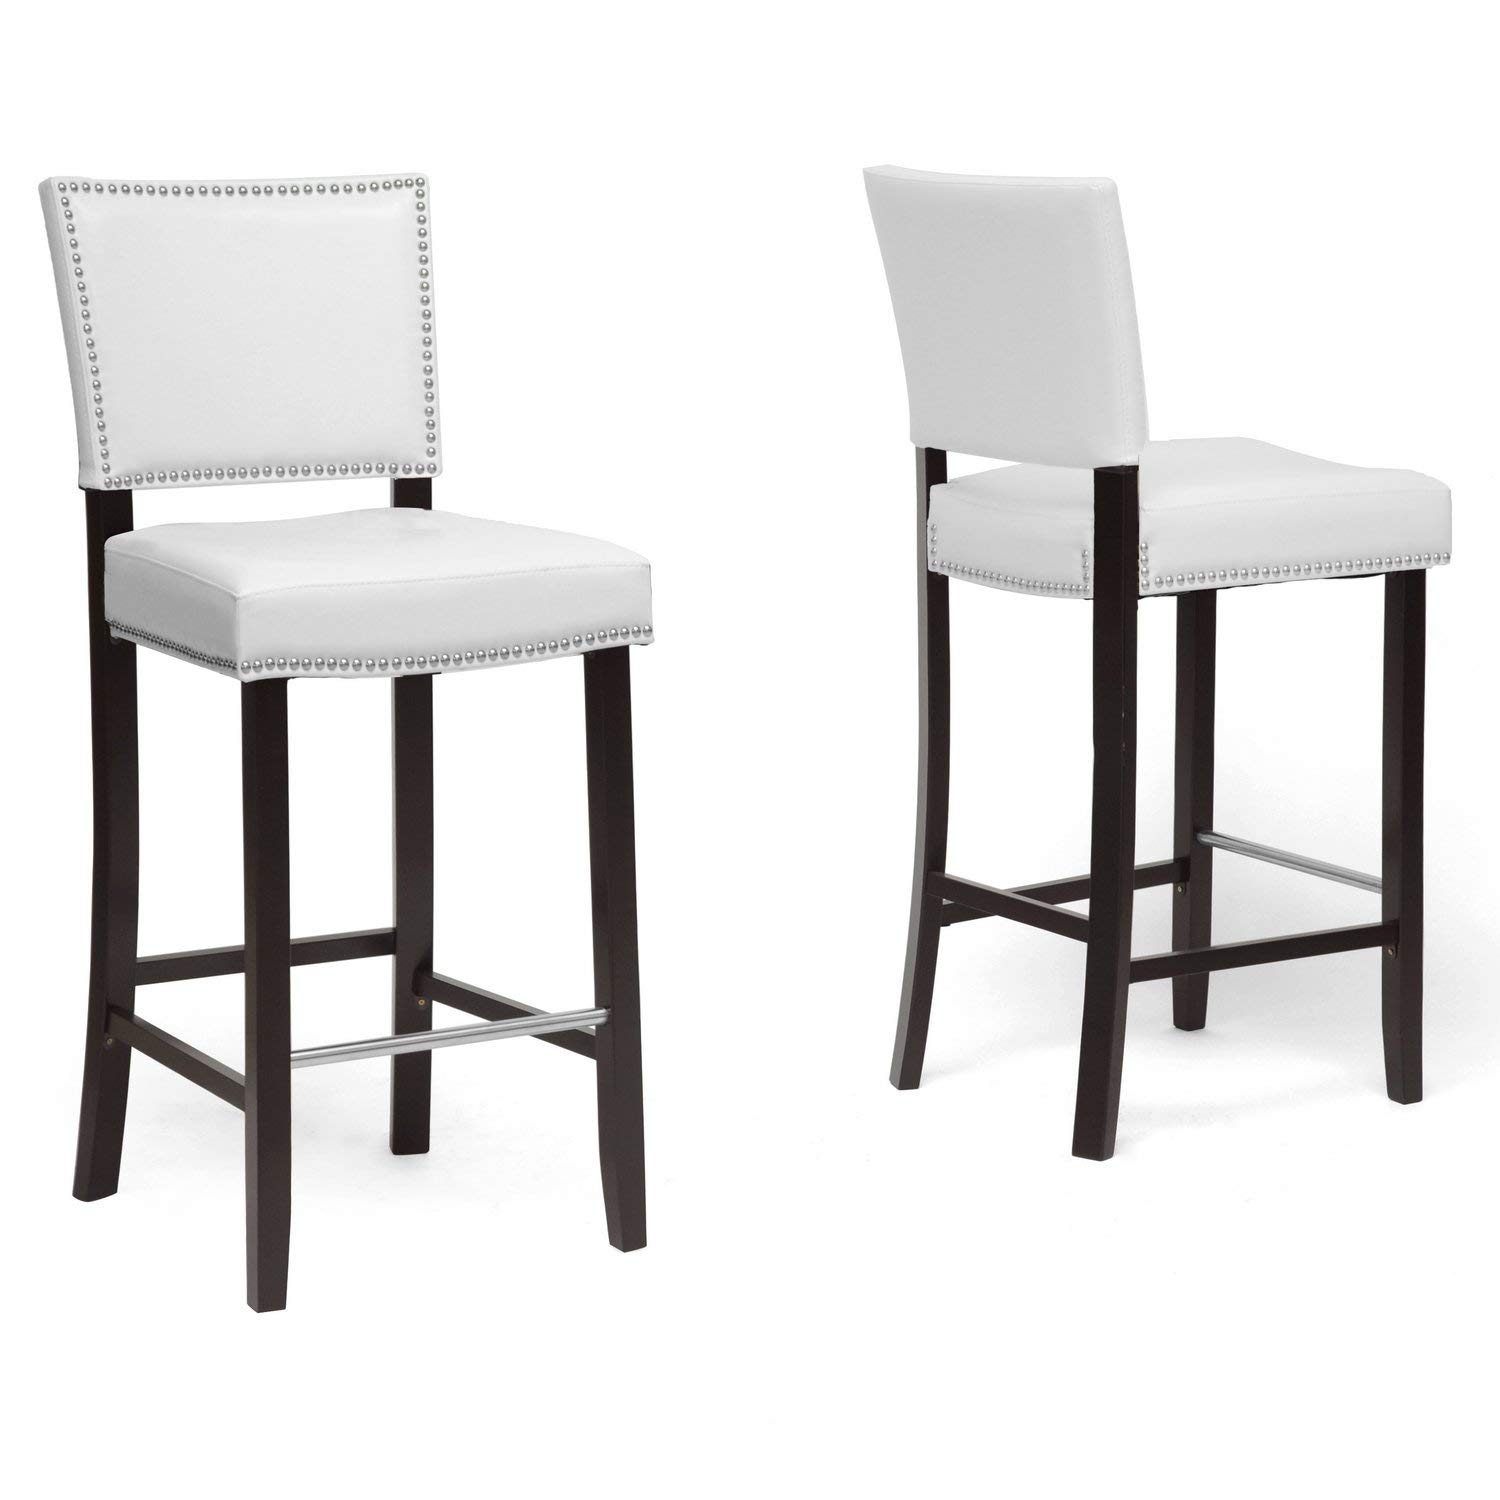 modern bar stools counter height amazon.com: baxton studio aries modern bar stool with nail head trim, ABQTTCX